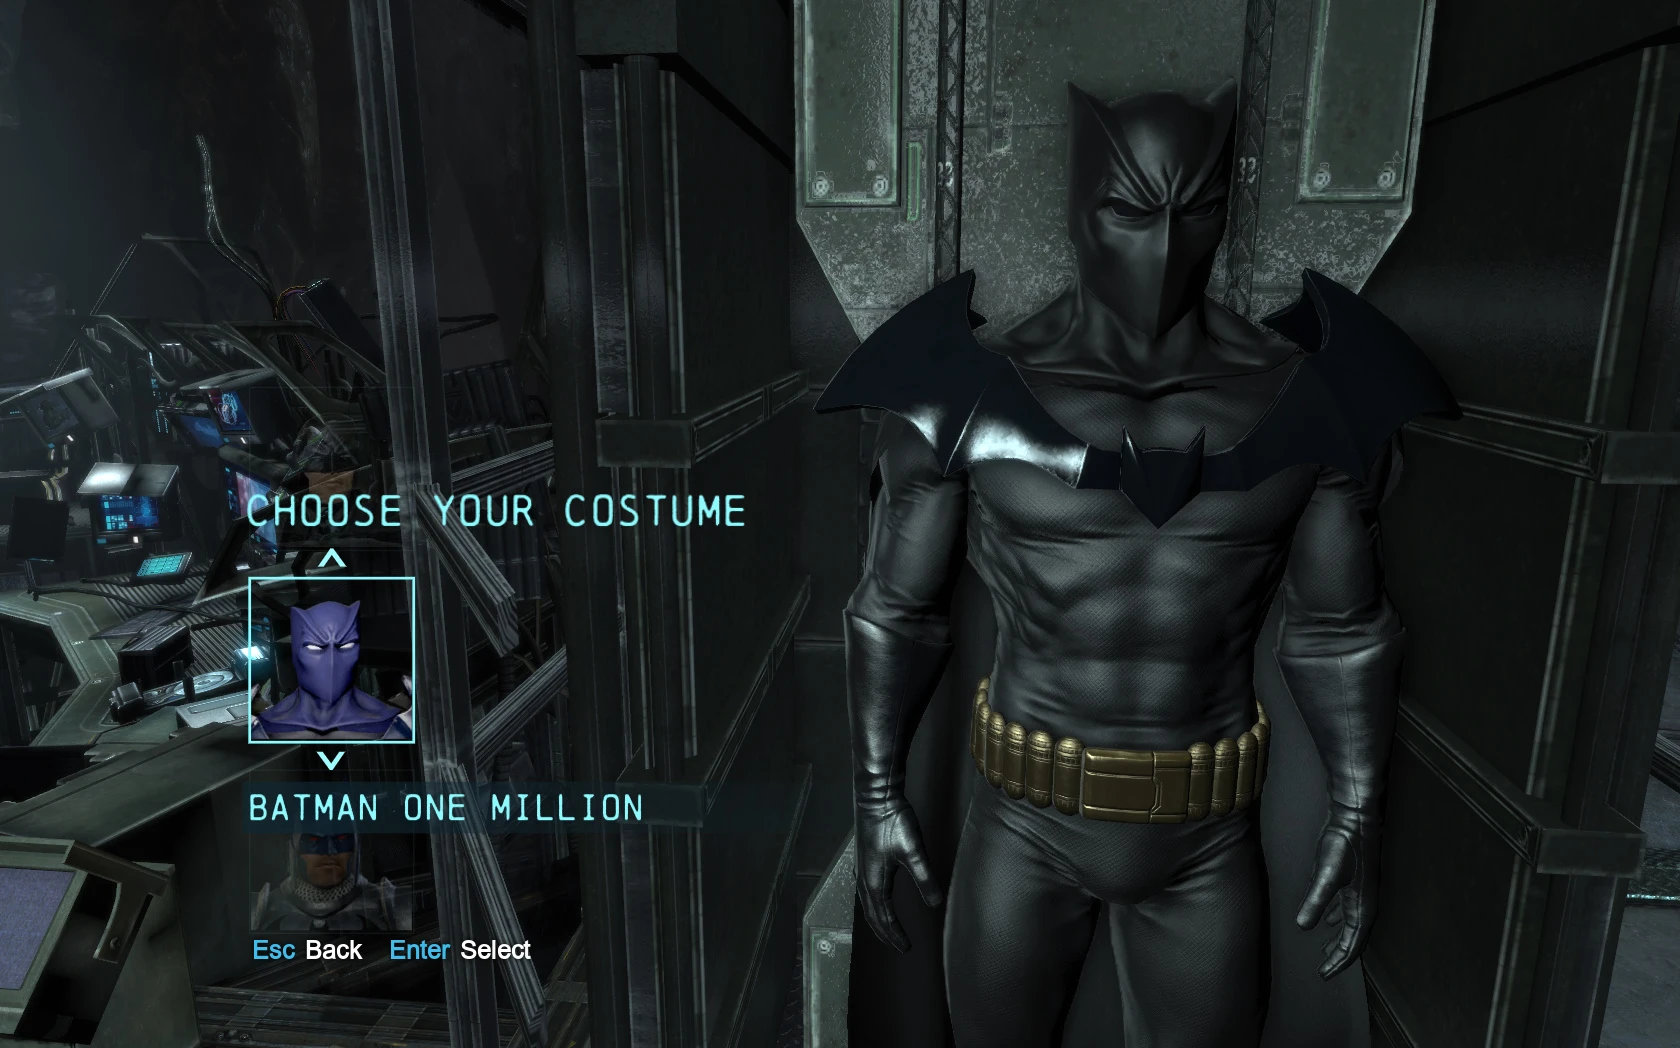 Batman origins костюмы. Костюм Бэтмена из Аркхем Сити. Batman Arkham Origins костюм one million. Бэтмен Аркхем Оригинс костюм. Бэтмен летопись Аркхема Бэткостюм.